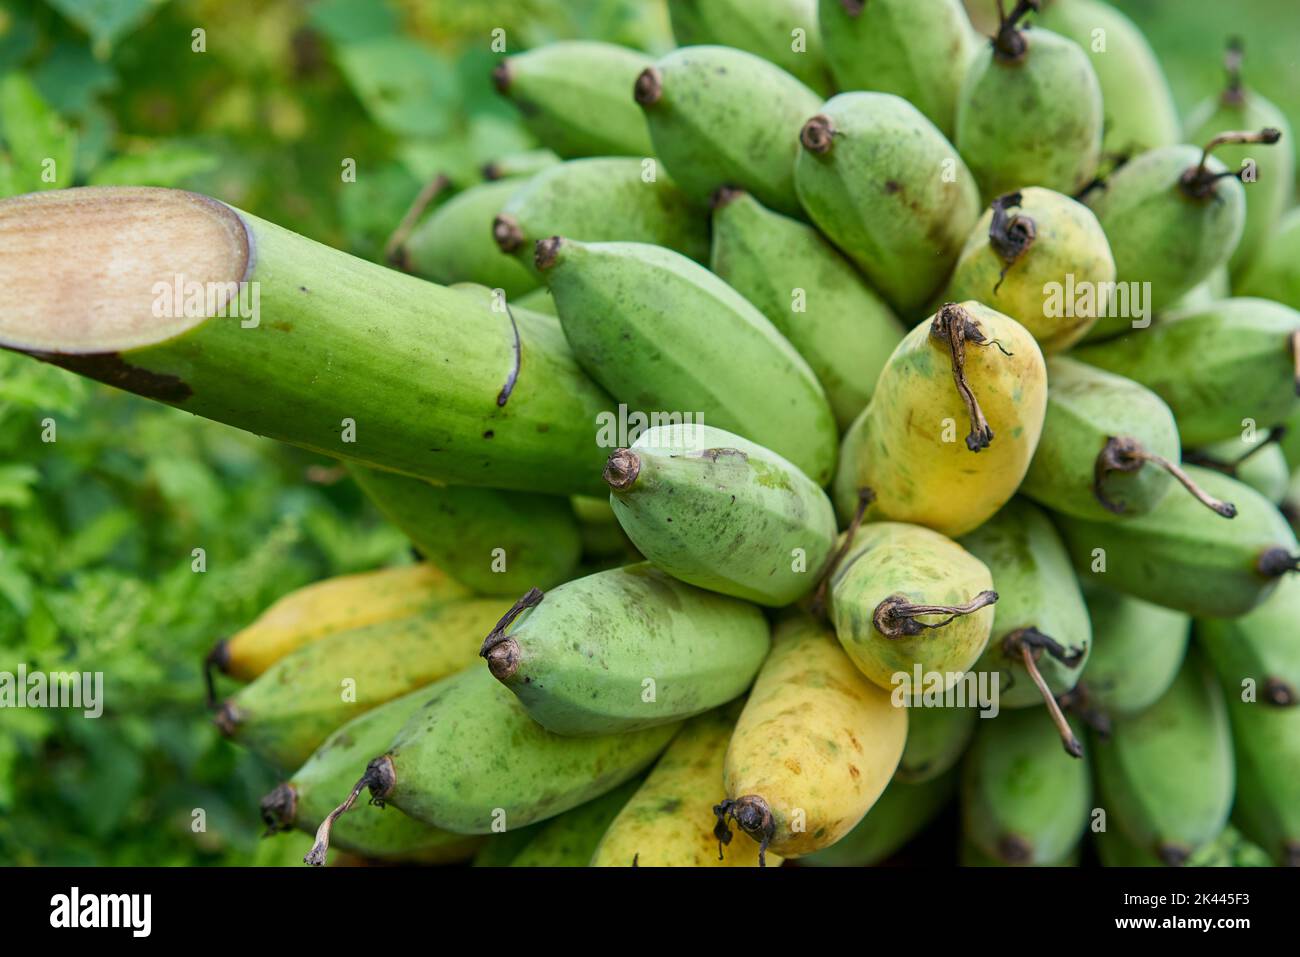 Fresh organic bananas just cut from a tree. Stock Photo